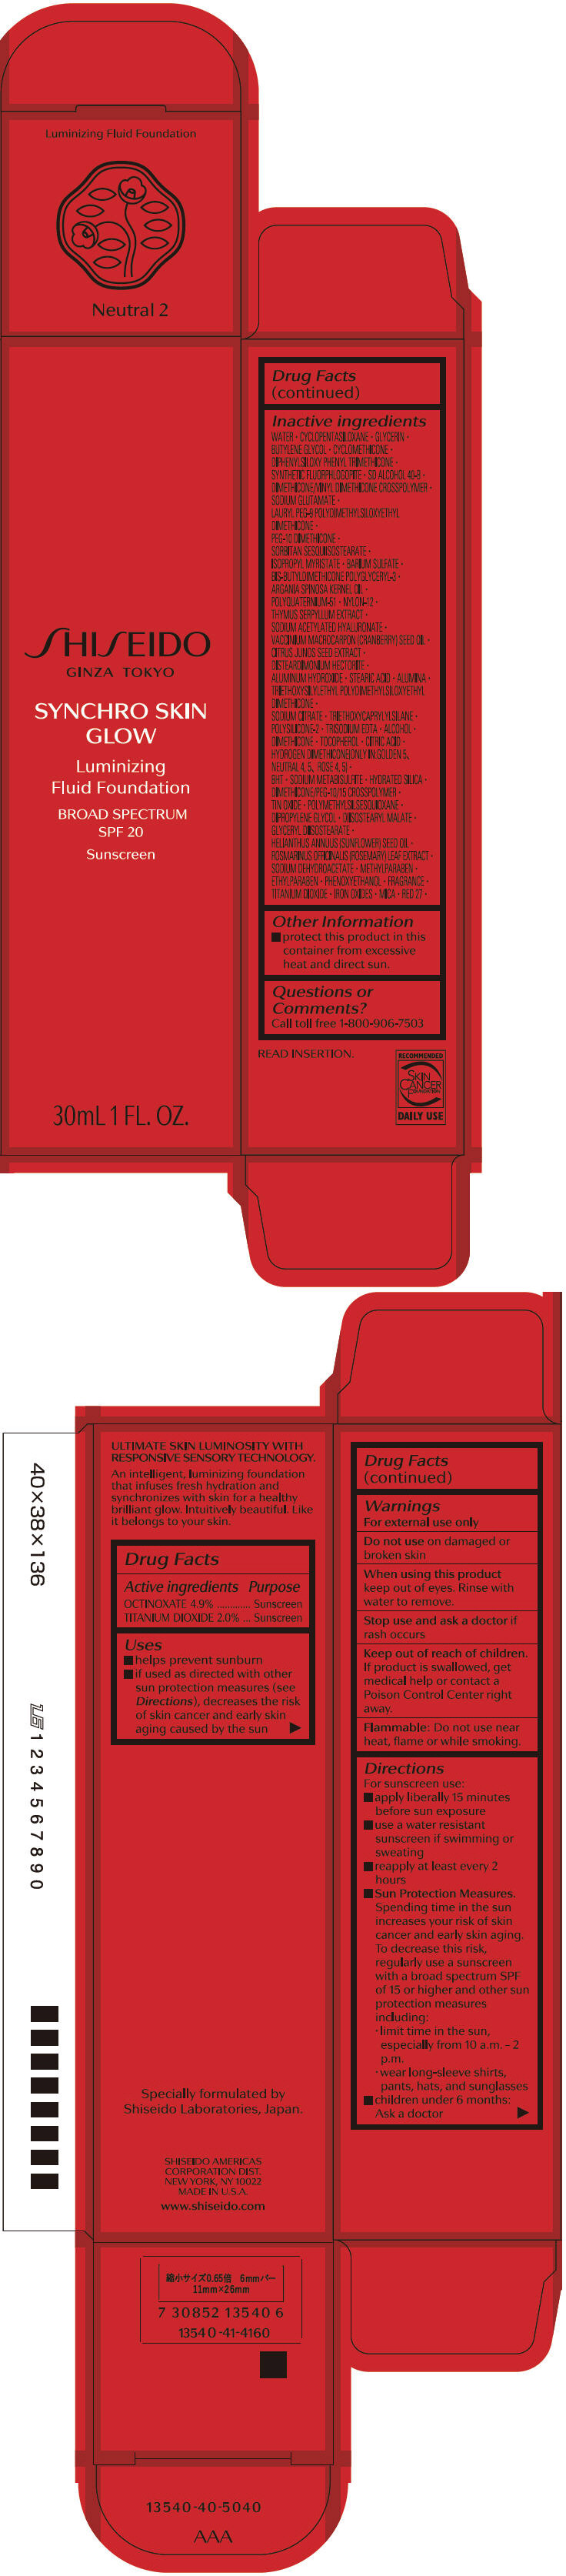 PRINCIPAL DISPLAY PANEL - 30 mL Bottle Carton - Neutral 2